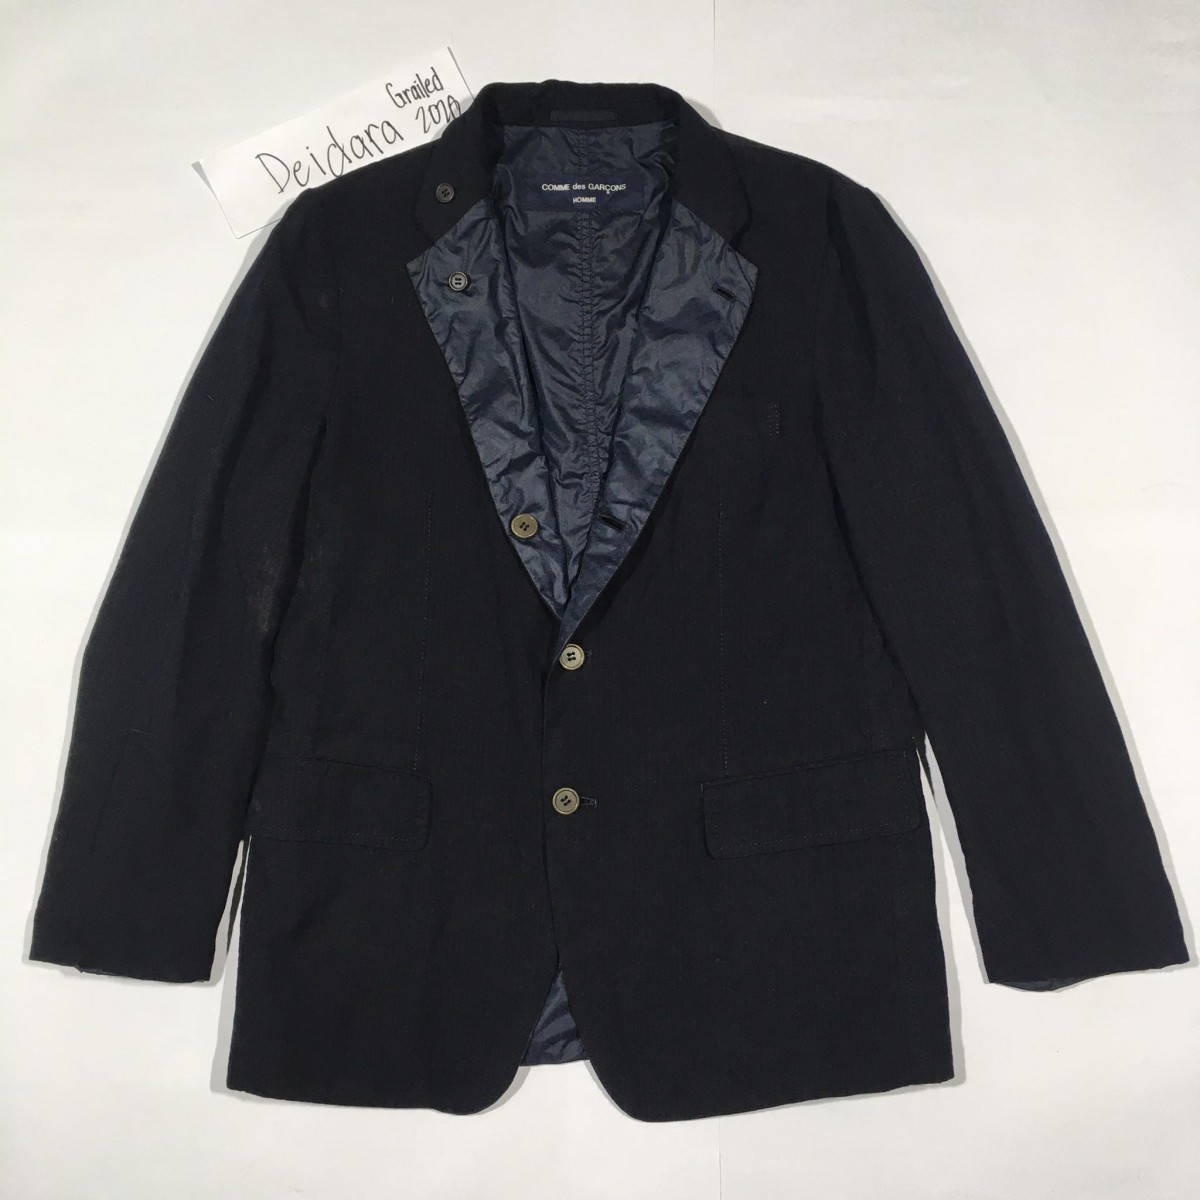 CDG Homme Reversible Twill Jersey Jersey Jacket / Blazer - 1